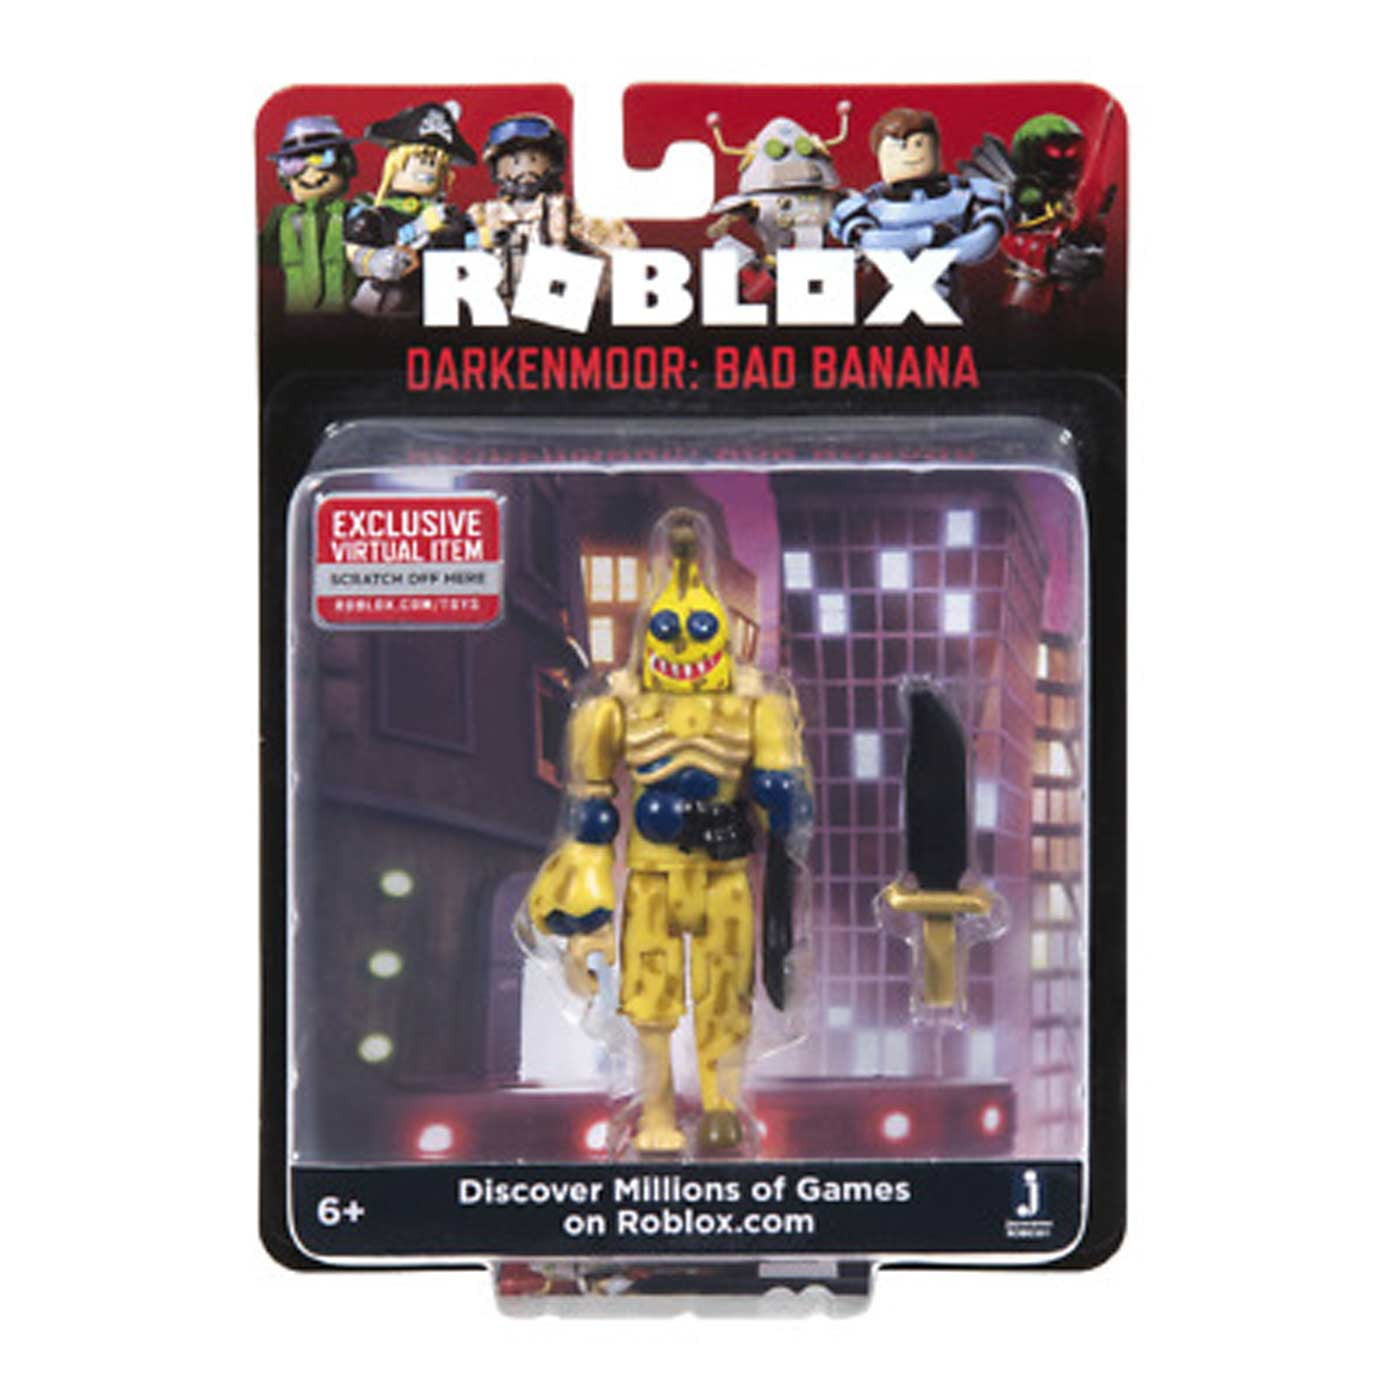 Roblox Action Collection Darkenmoor Bad Banana Figure Pack Includes Exclusive Virtual Item Walmart Com Walmart Com - roblox bad business codes